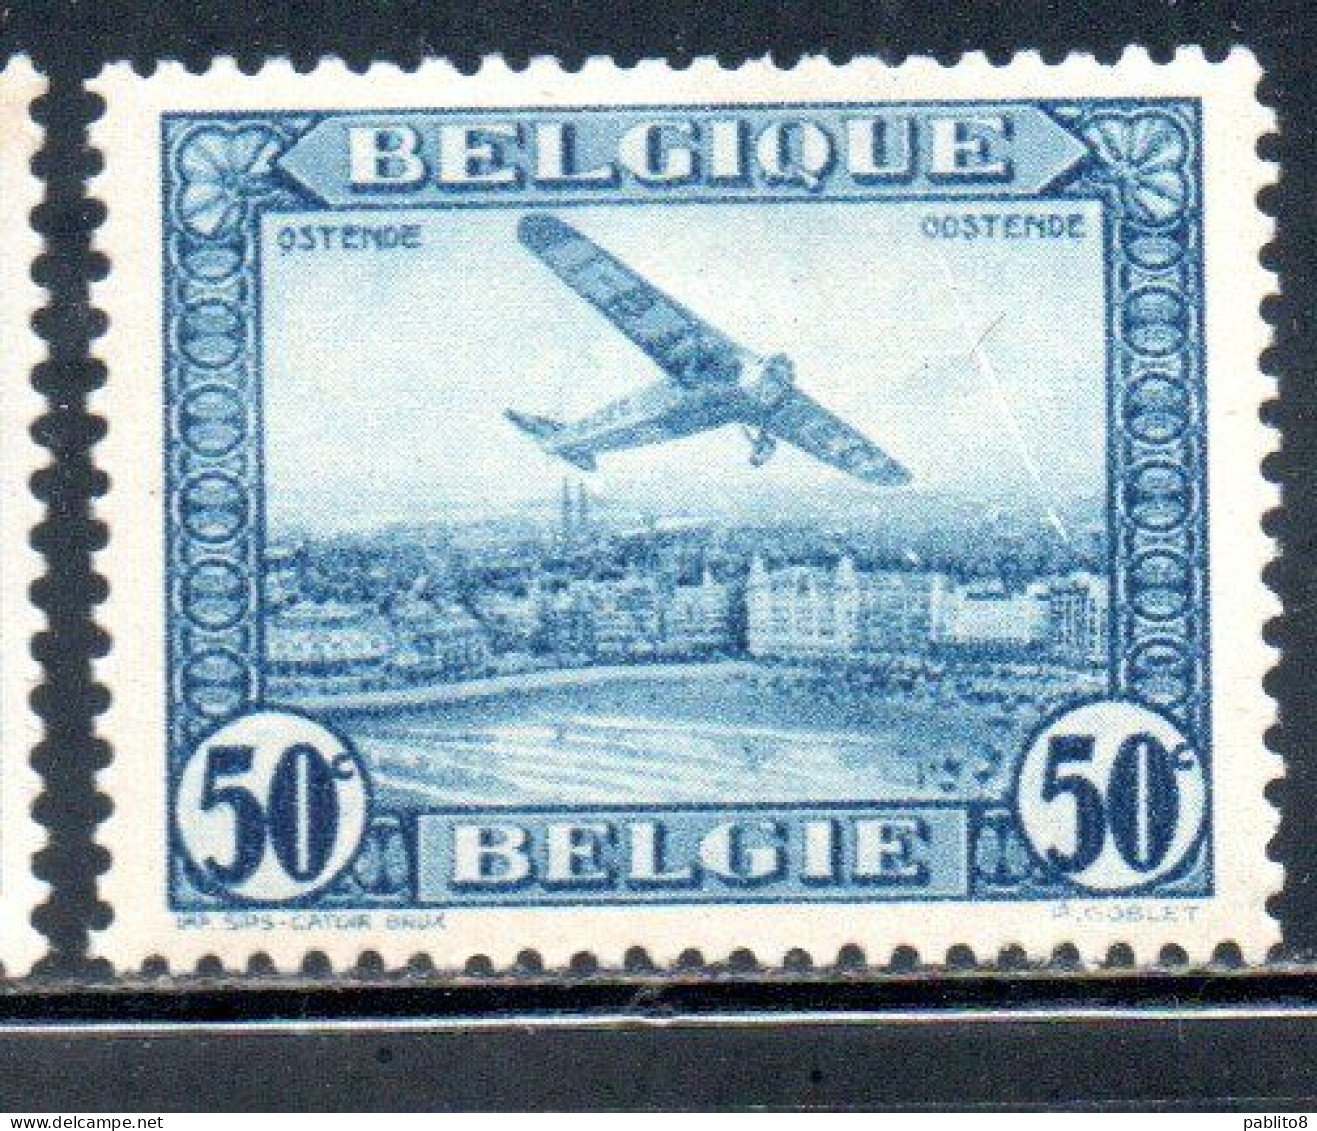 BELGIQUE BELGIE BELGIO BELGIUM 1930 AIR POST MAIL STAMP AIRMAIL FOKKER FVII/3m OVER OSTEND 50c MH - Mint